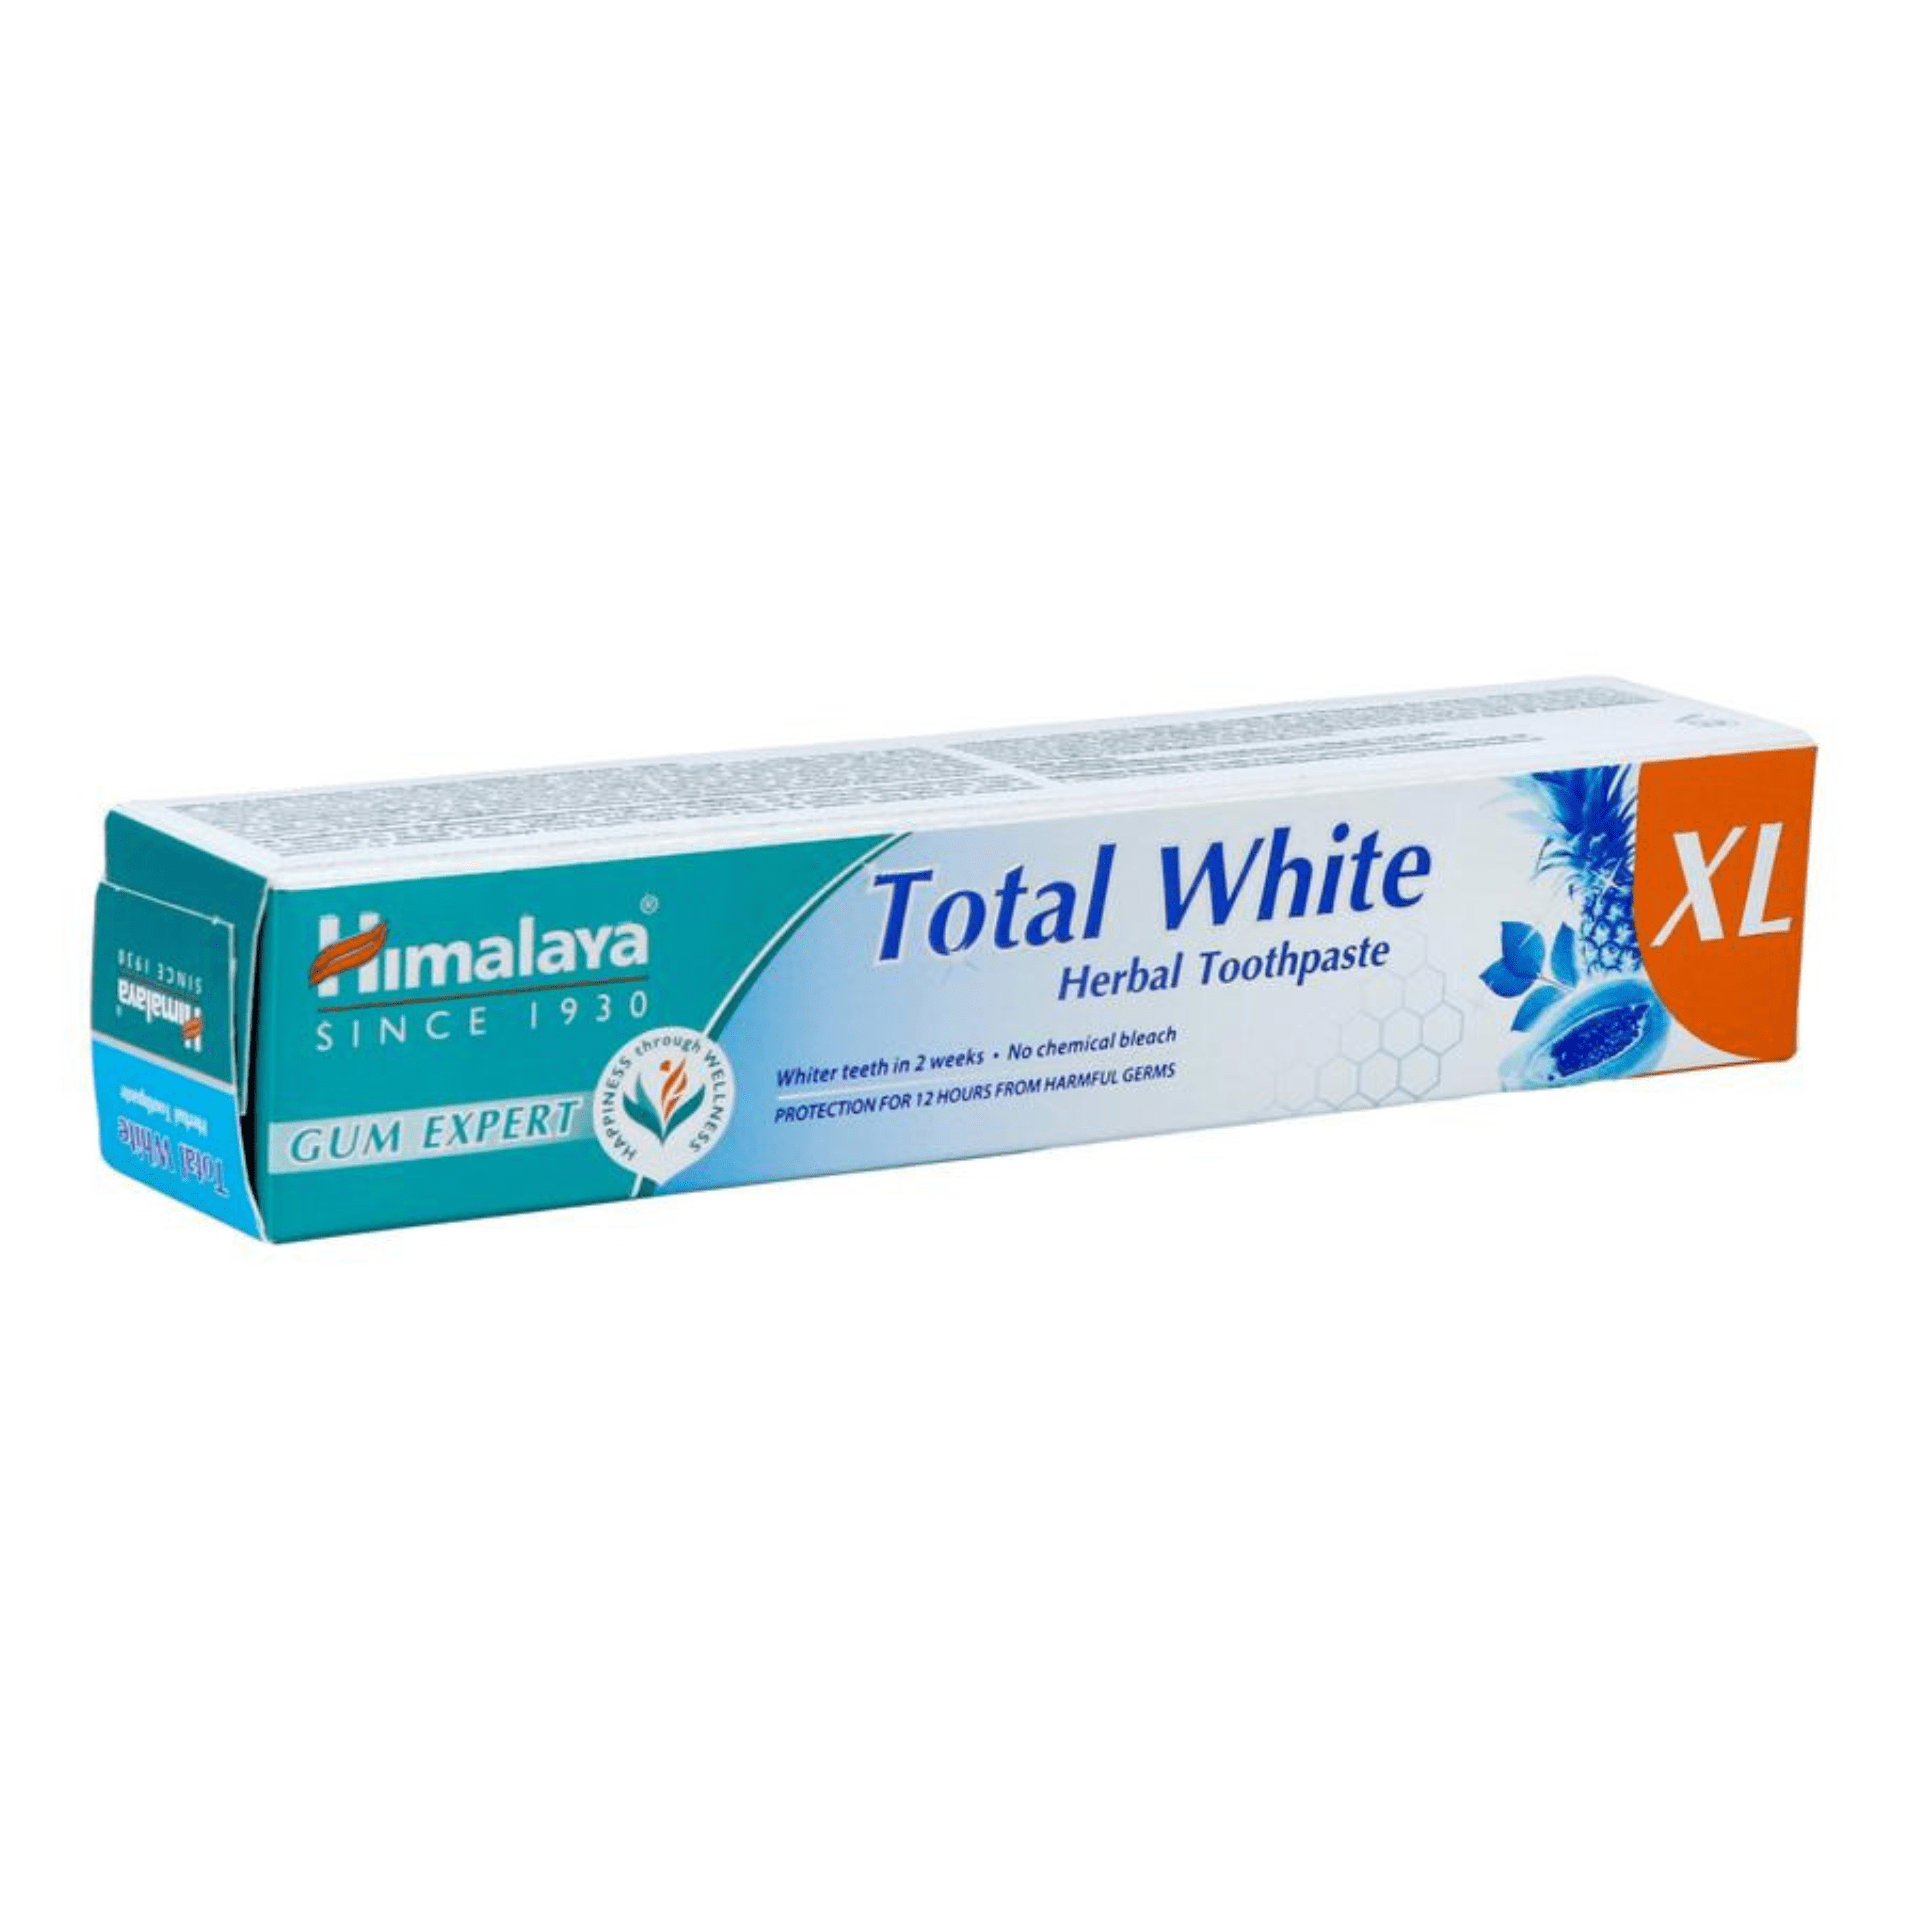 Himalaya Gum Expert Total White XL